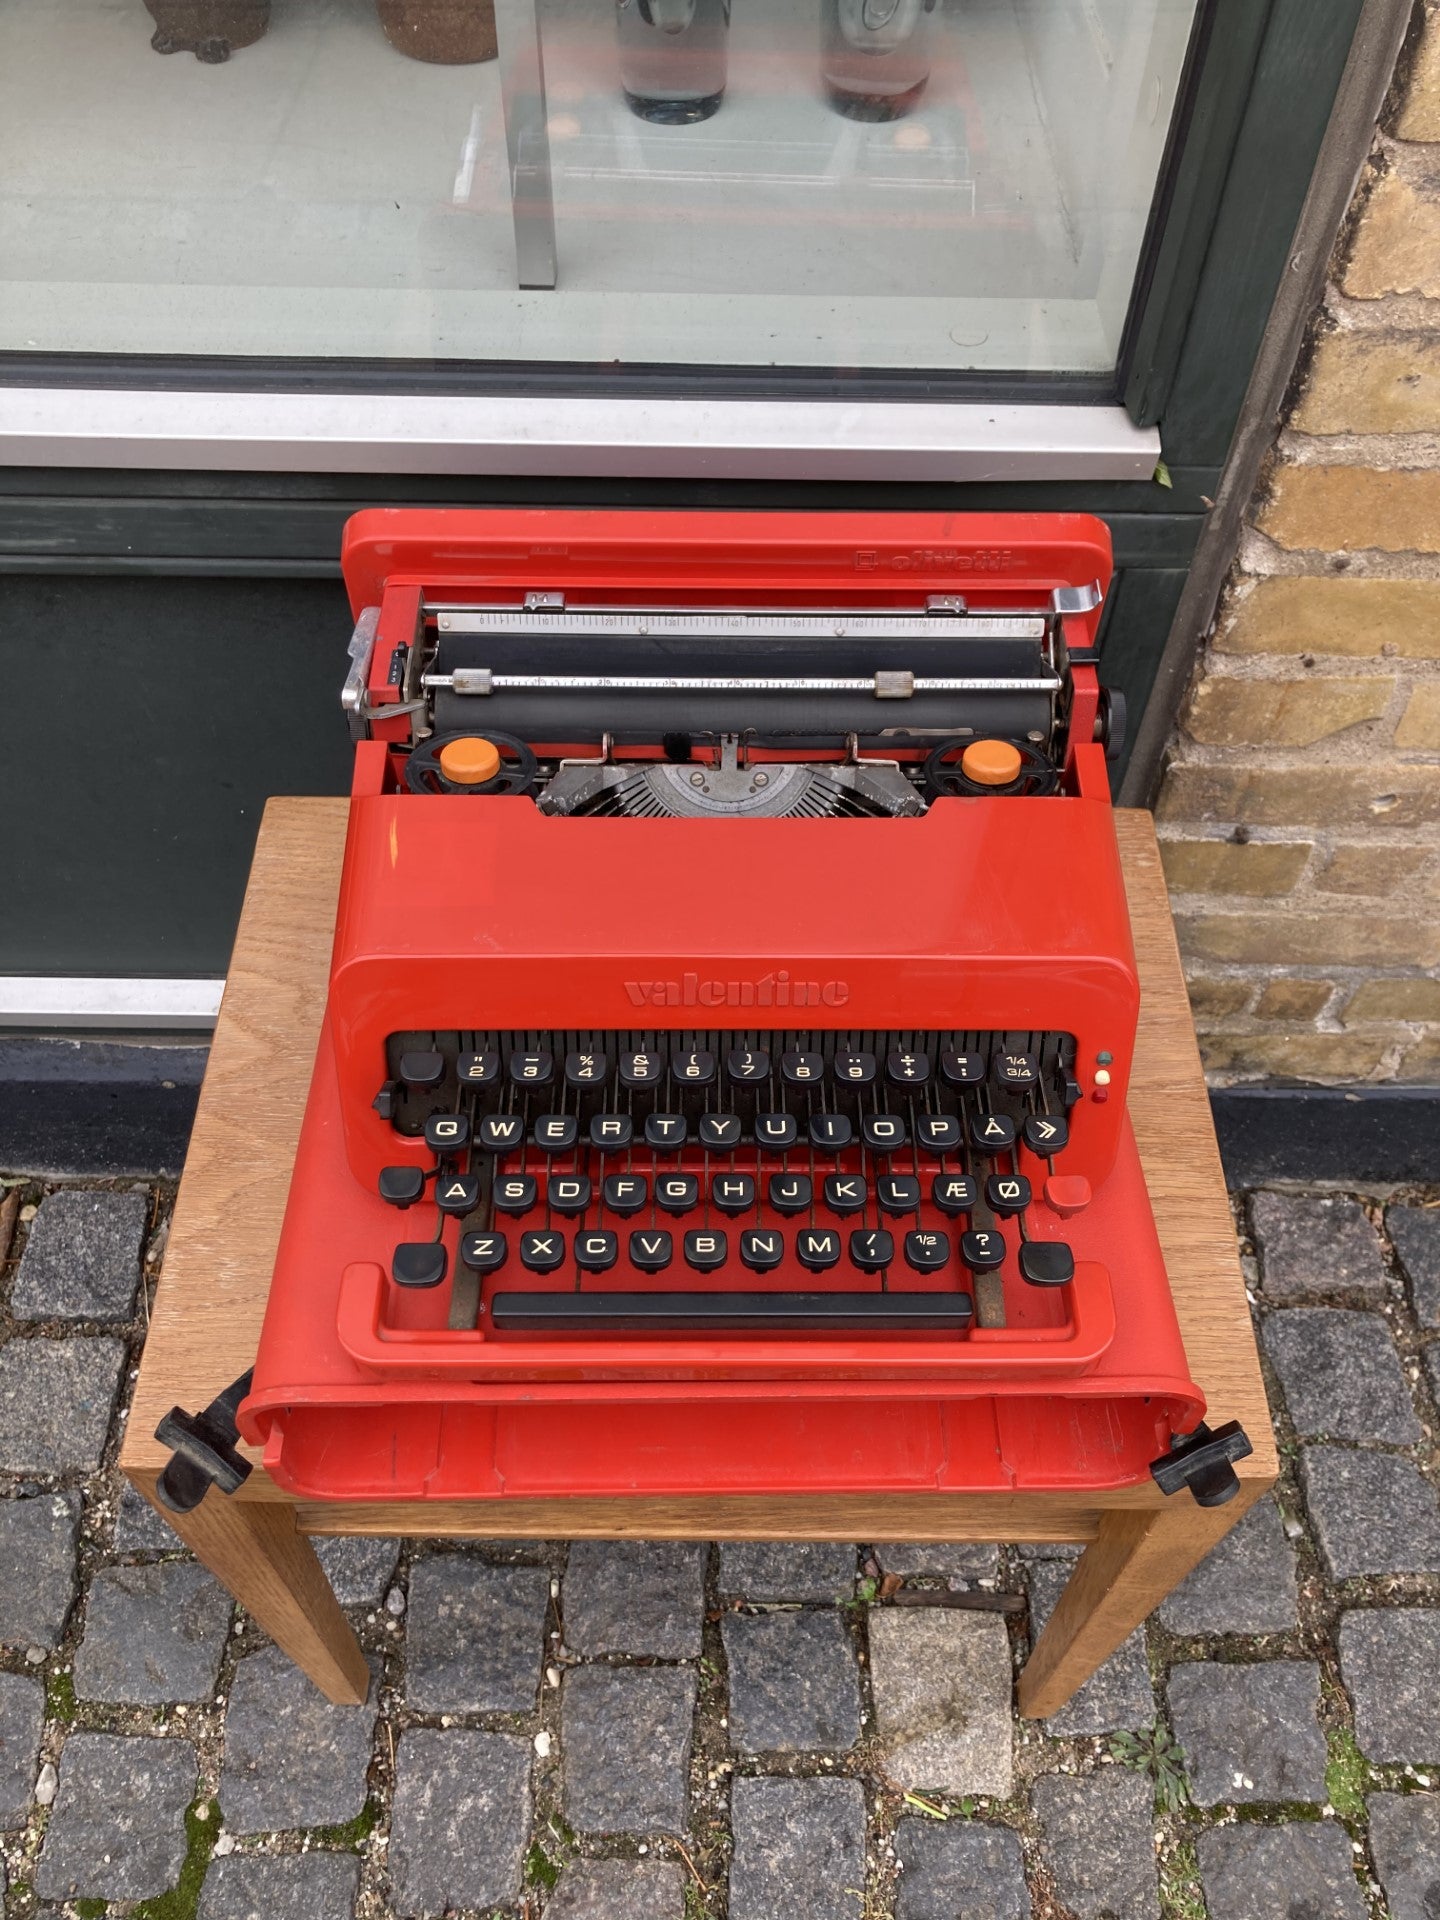 Vintage Olivetti Valentine typewriter - Works perfectly - No. 01006